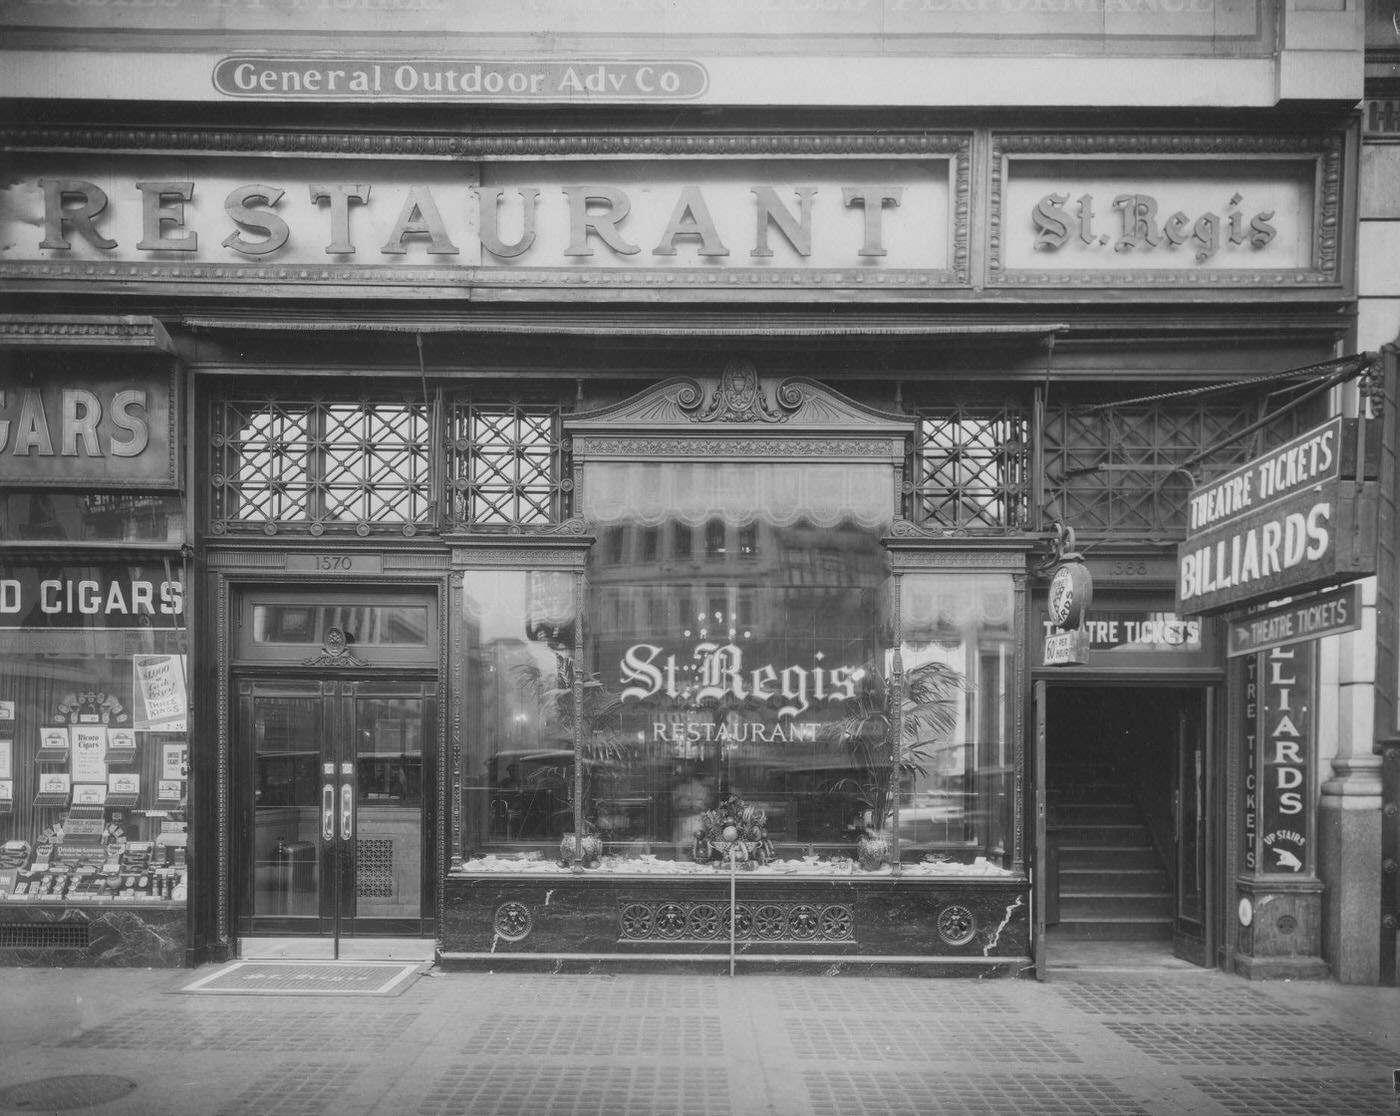 St Regis Restaurant, 1570 Broadway, New York City, 1929.